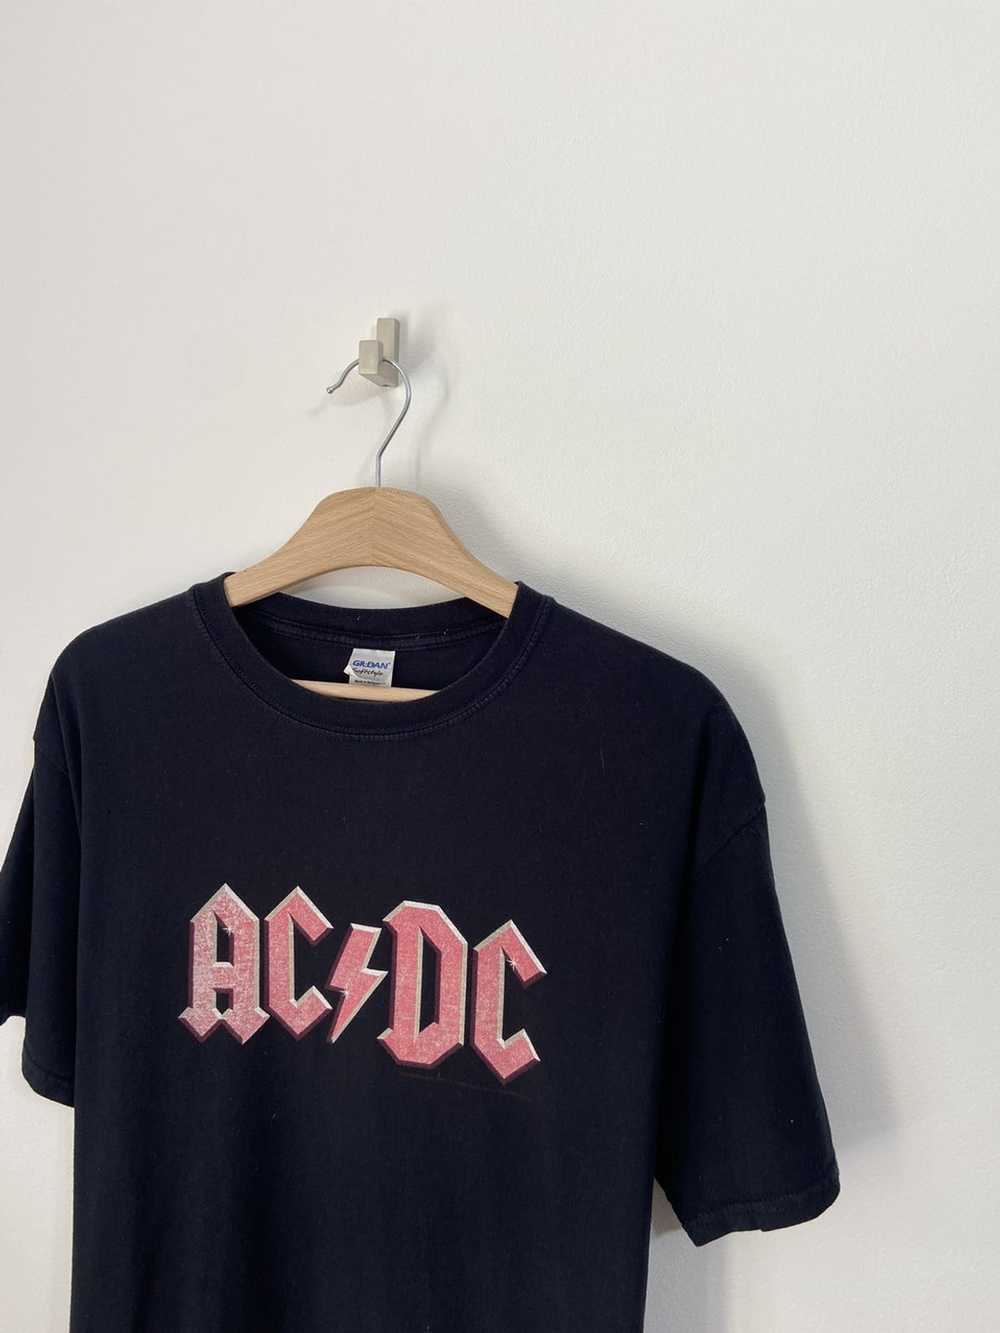 Ac/Dc × Vintage Vintage AC/DC Shirt 2010 - image 2